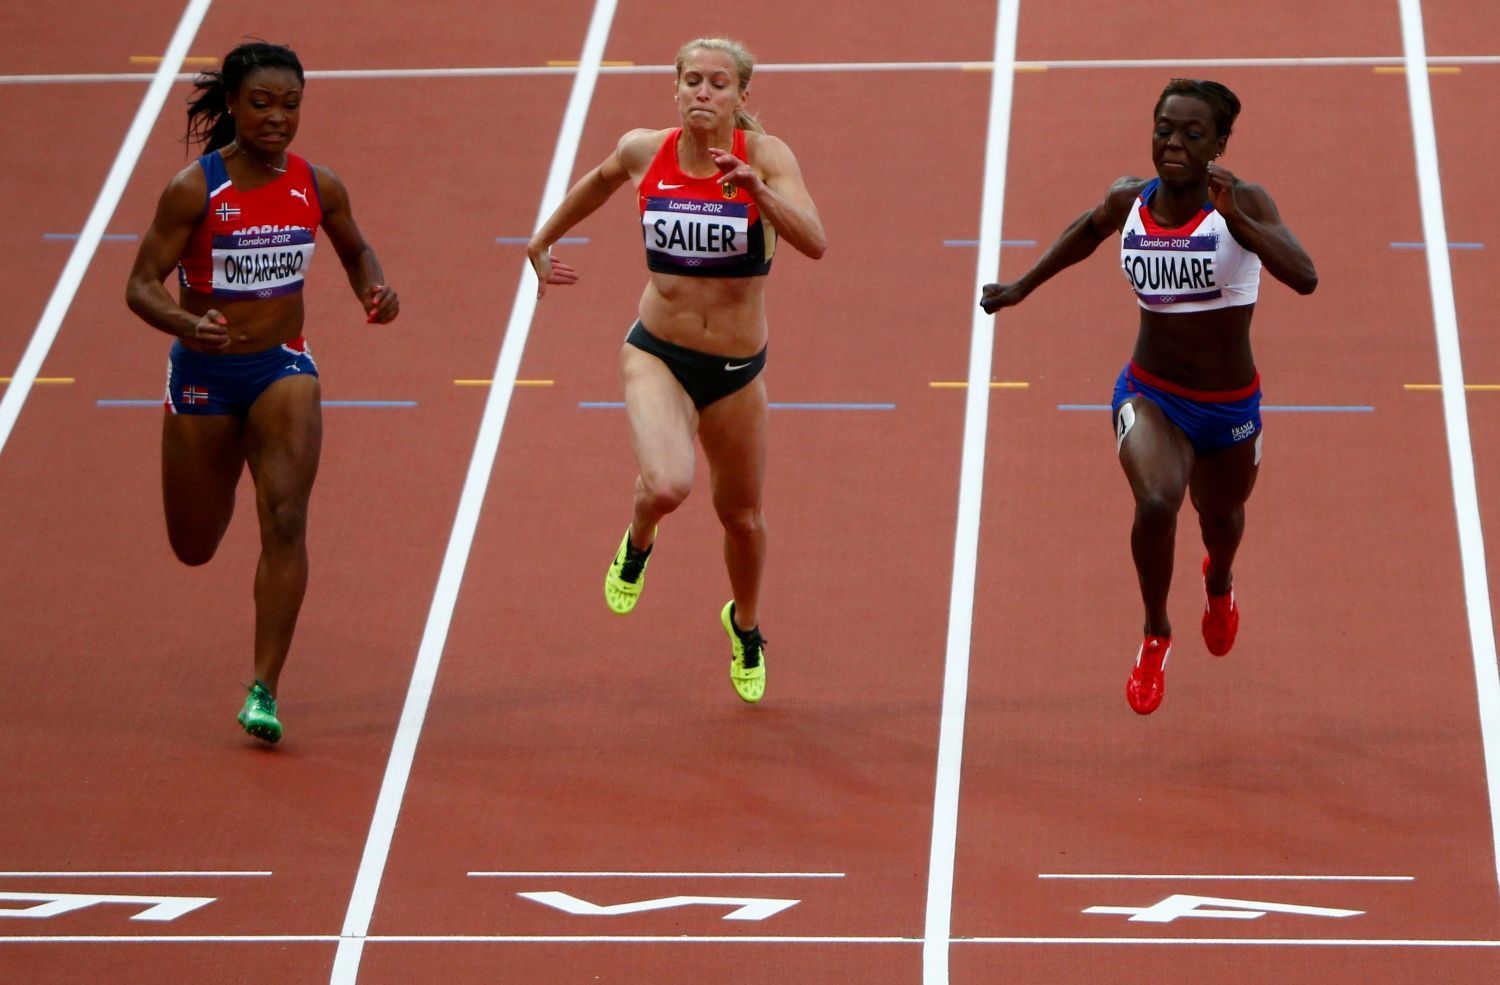 Norská sprinterka Ezinne Okparaebová, Němka Verena Sailerová a Francouzka Myriam Soumareová (zleva) dobíhají závod na 100 metrů v prvním rozběhu OH 2012 v Londýně.